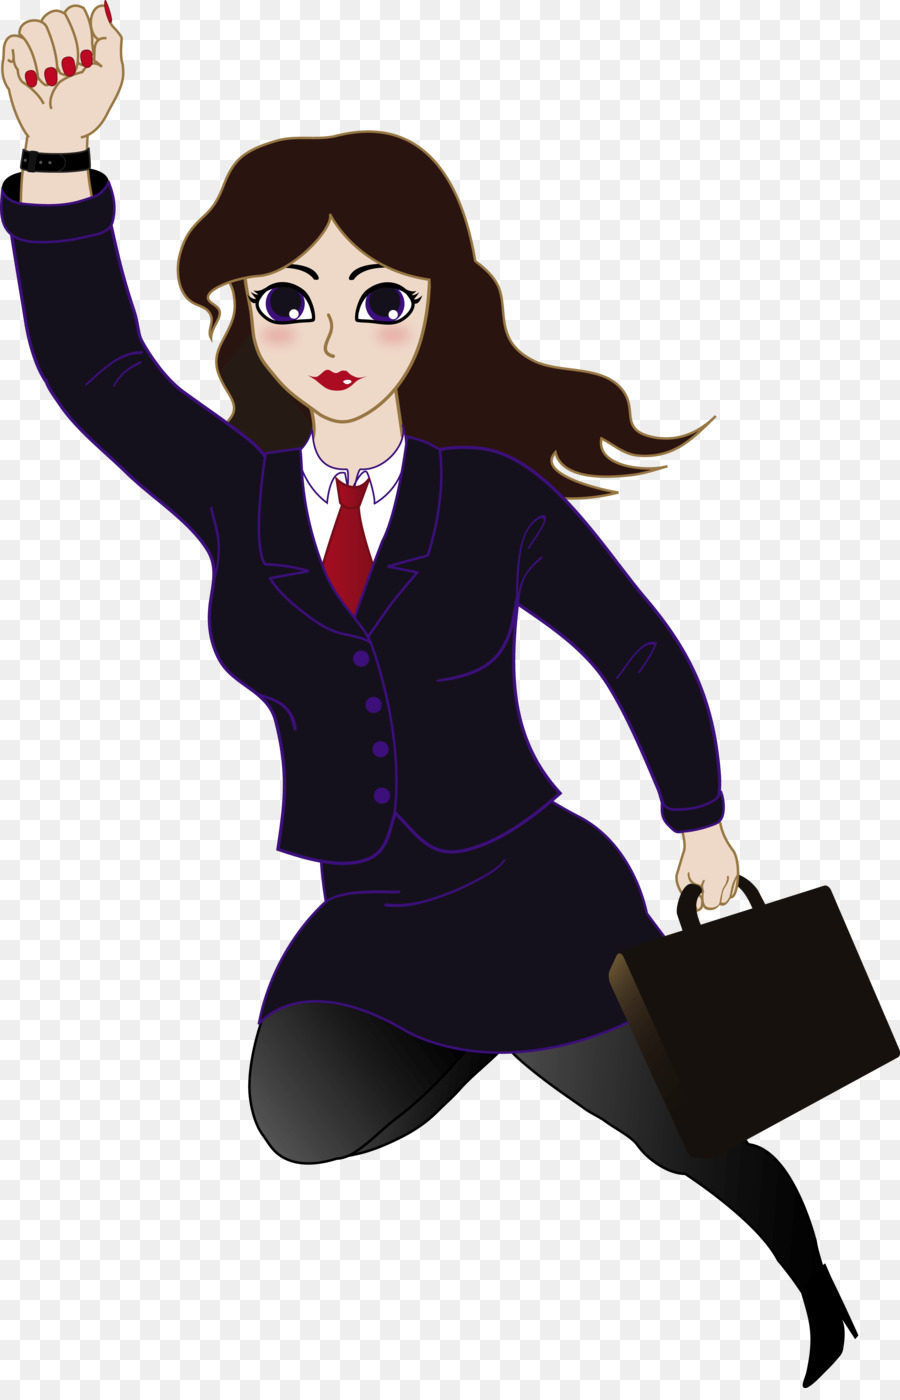 Woman businessperson clip art. Career clipart character